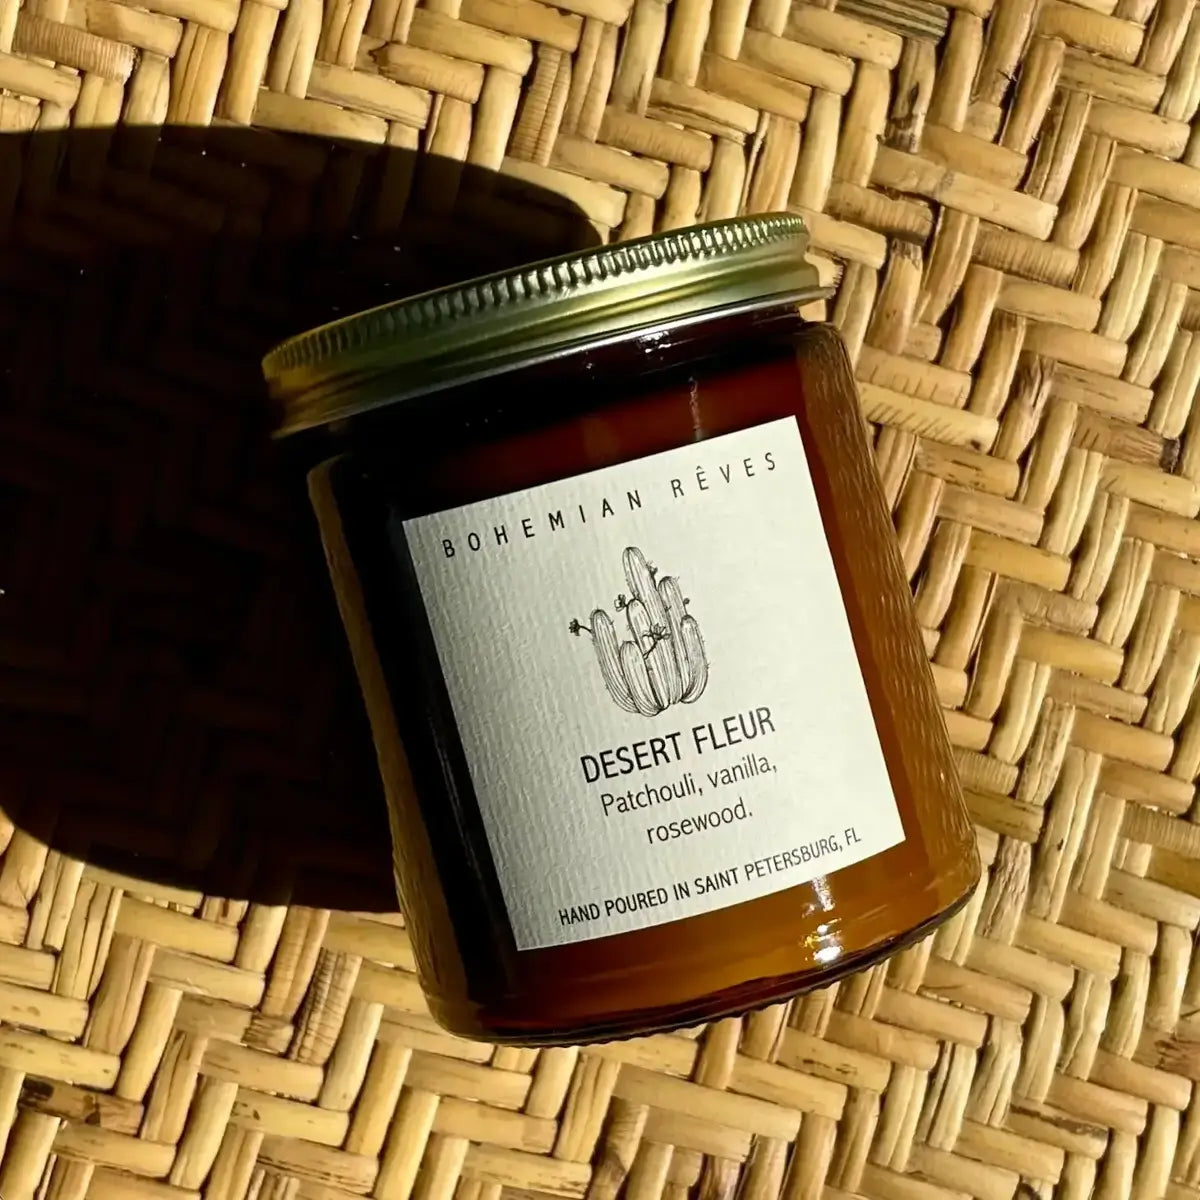 Bohemian Reves Desert Fleur Candle in Amber Jar